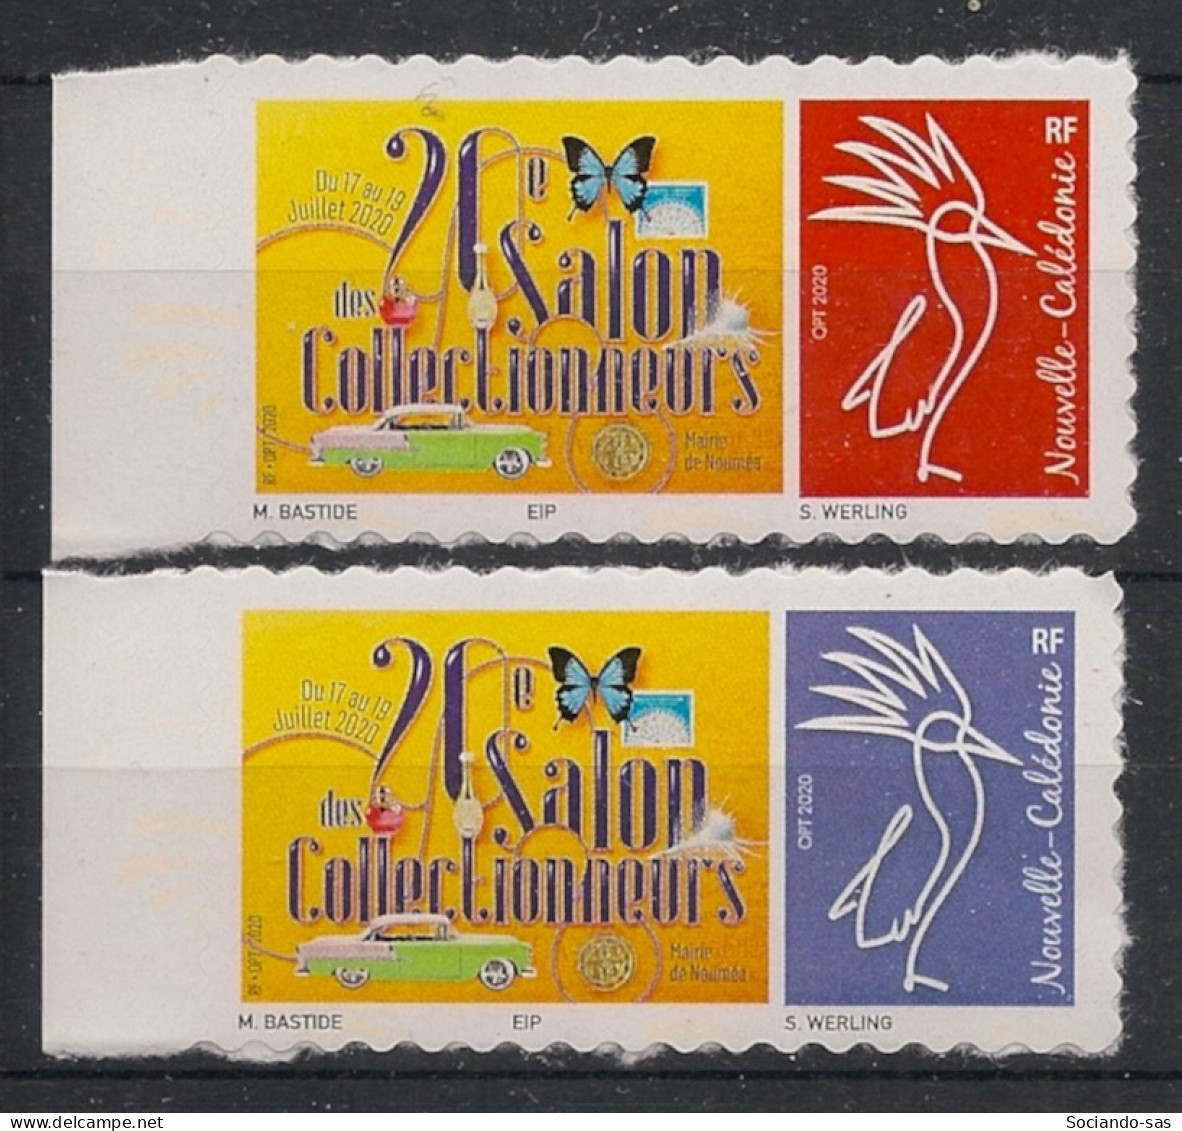 NOUVELLE-CALEDONIE - 2020 - N°YT. 1394 à 1395 - Salon Nouméa - Neuf Luxe ** / MNH / Postfrisch - Unused Stamps